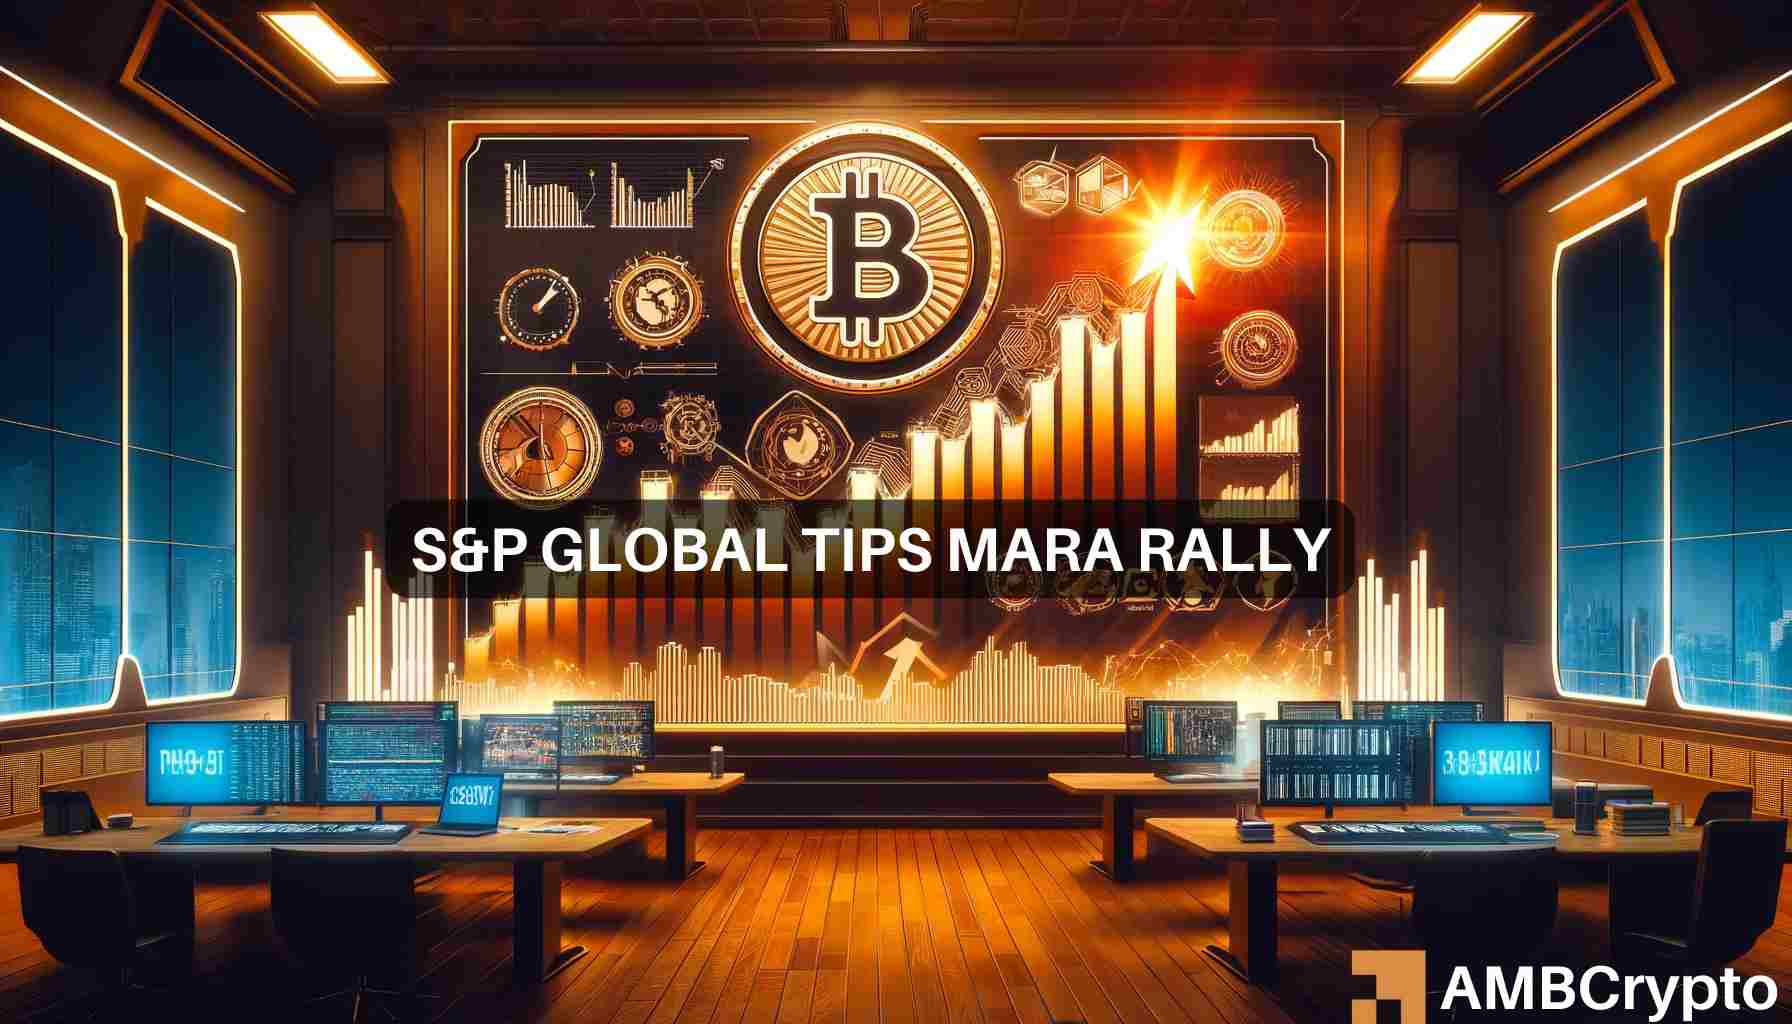 Bitcoin miner Marathon Digital’s MARA hikes 17% after S&P 600 listing